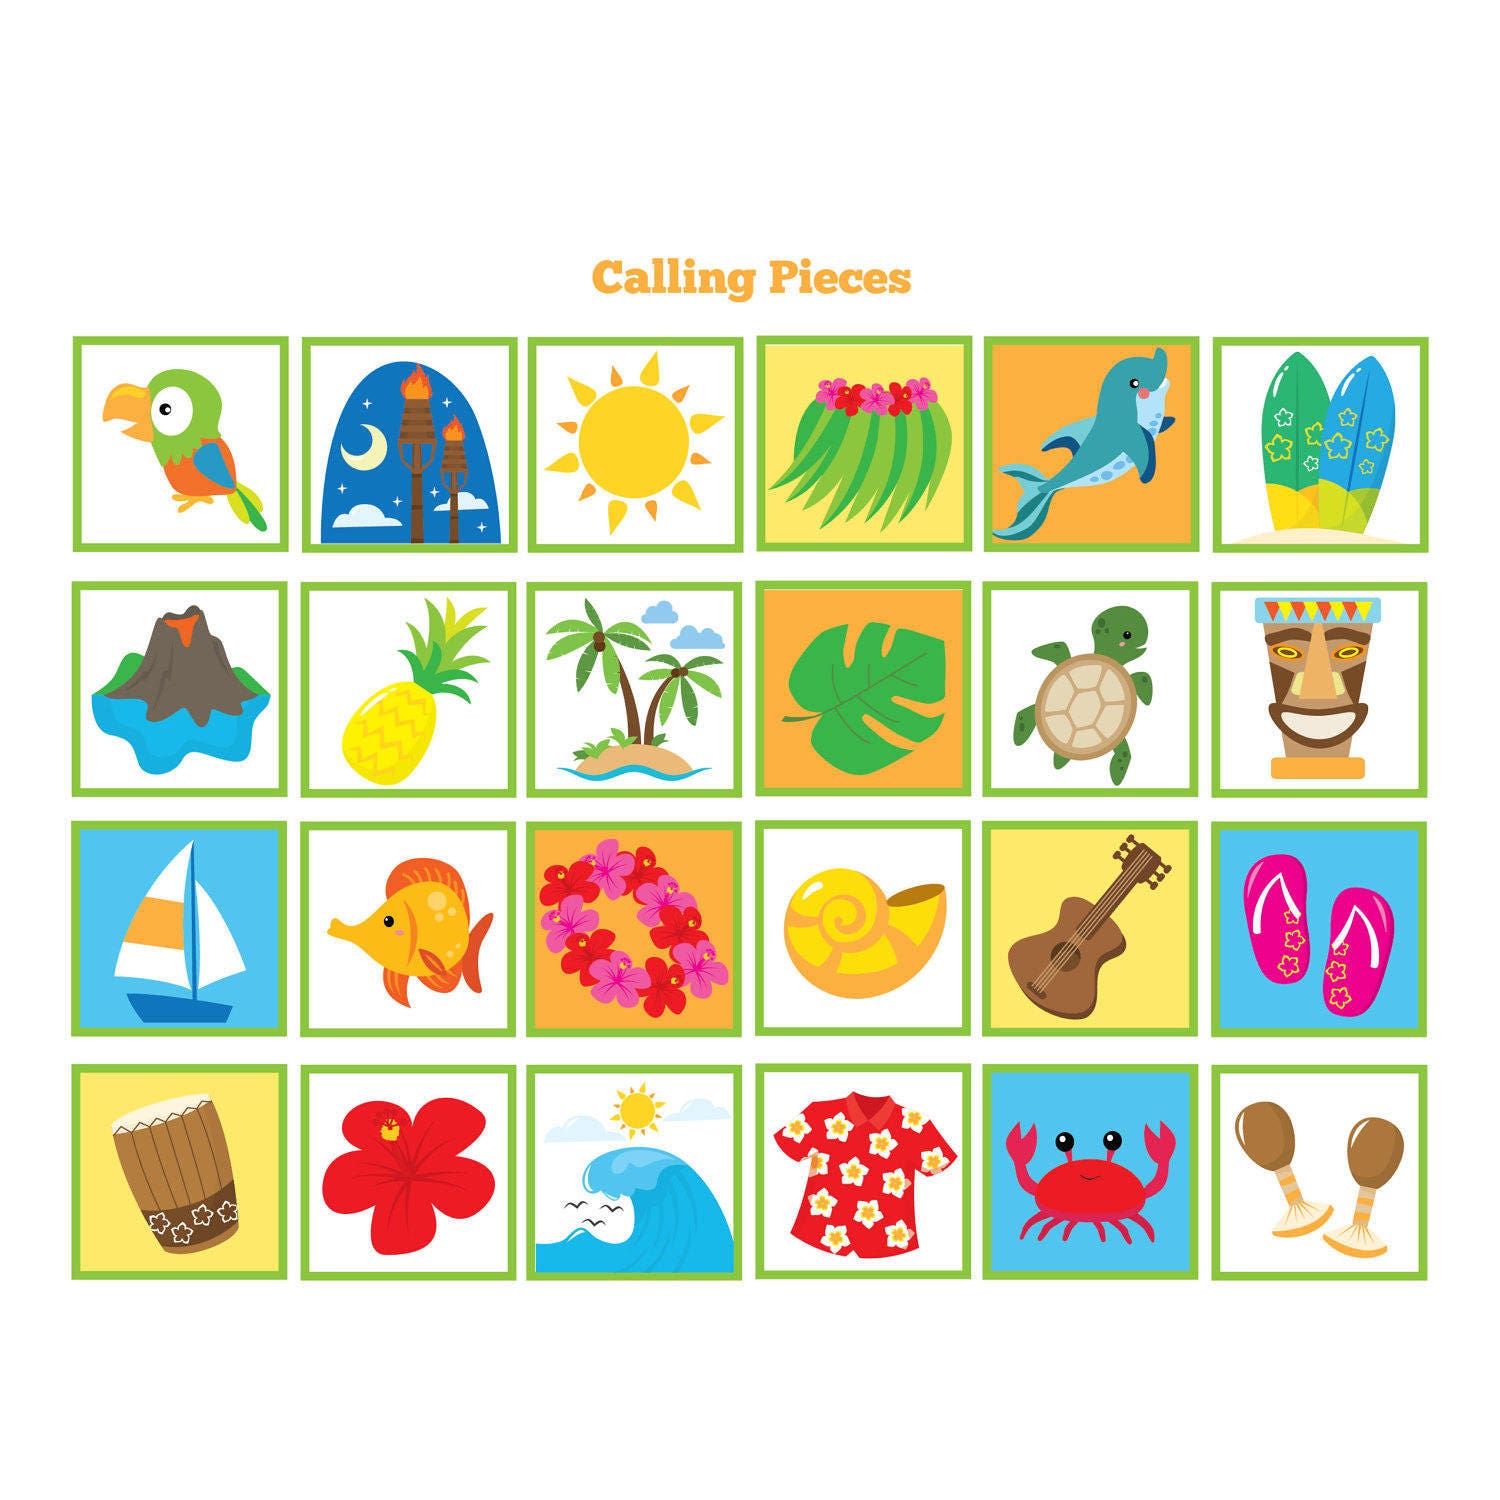 Free Printable Luau Bingo Cards